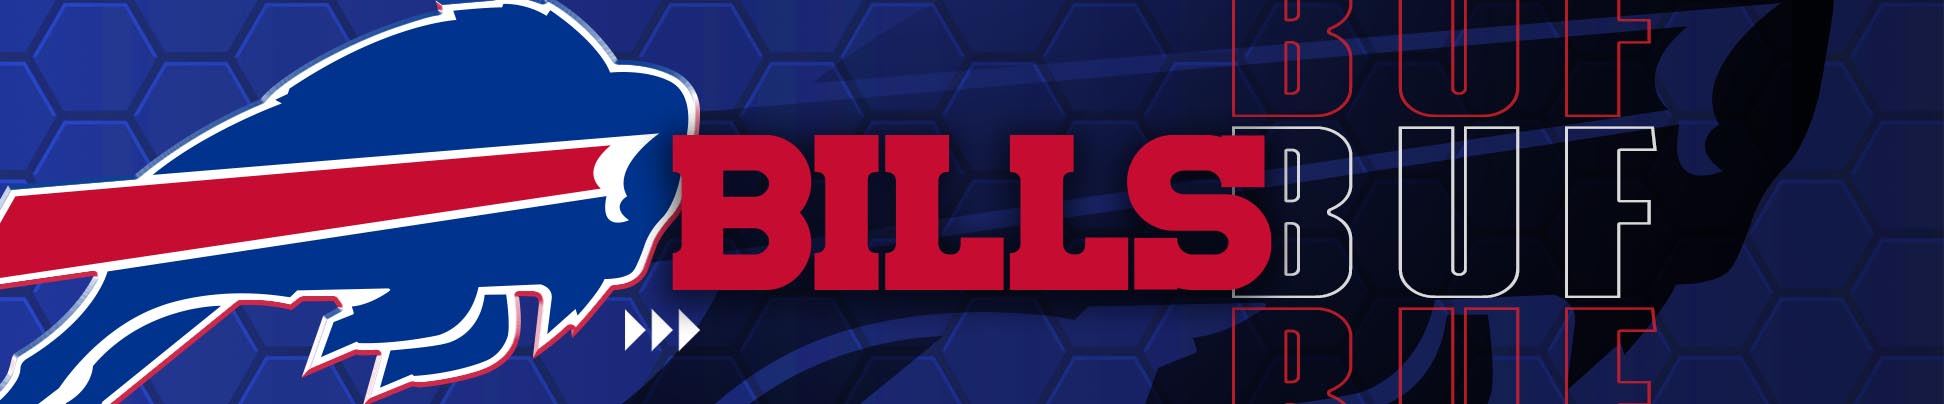 Buffalo Bills Memorabilia. Bills Collectibles